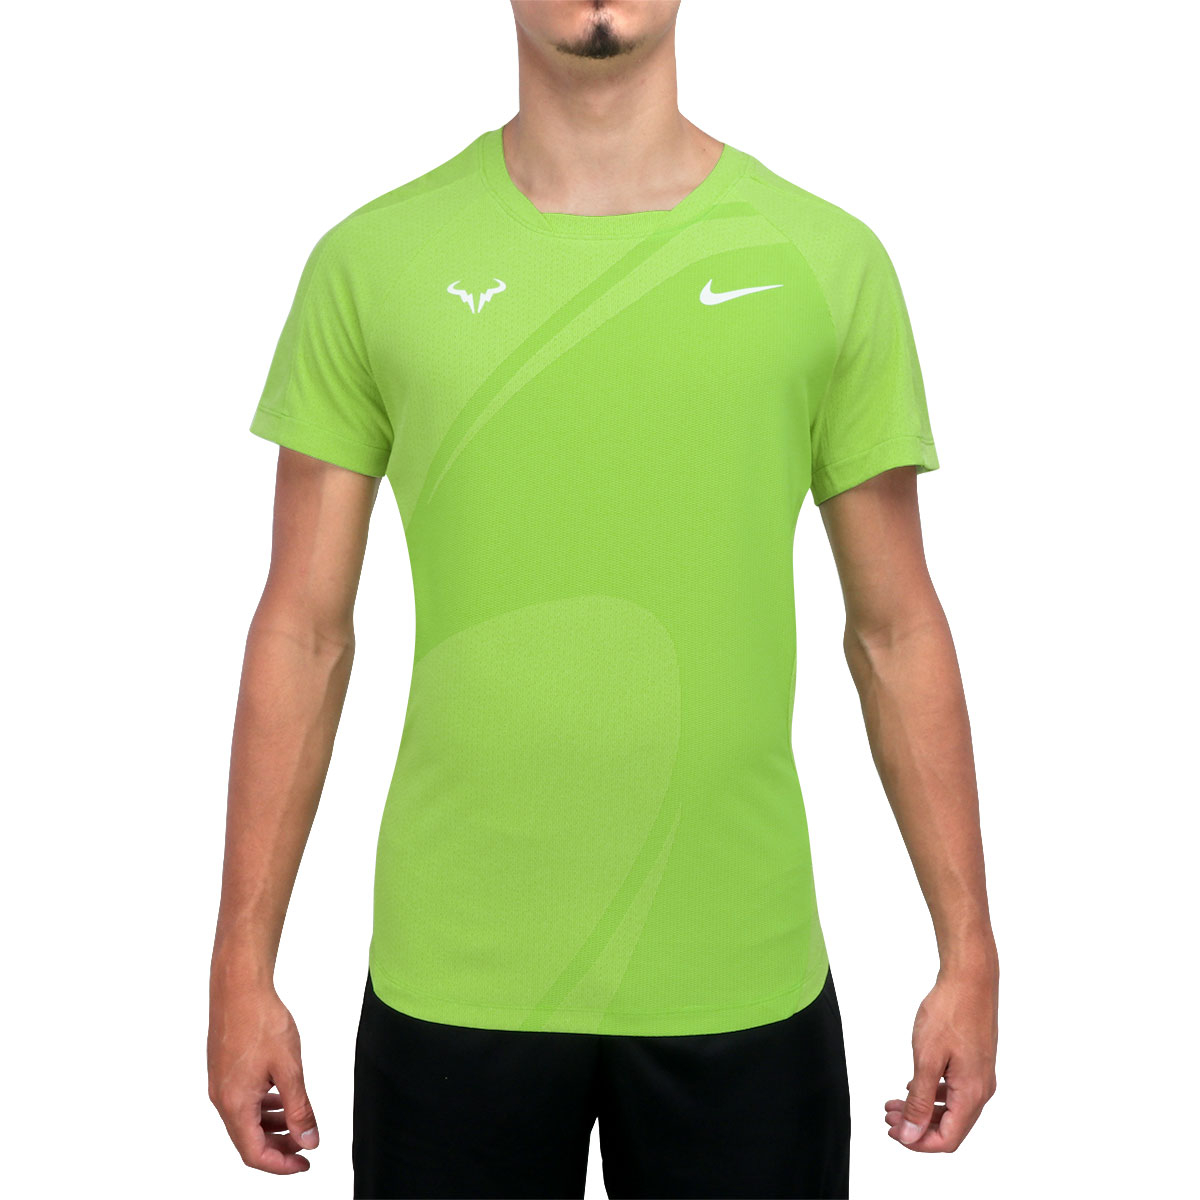 Camiseta Nike Dry Top Feminina - Empório do Tenista